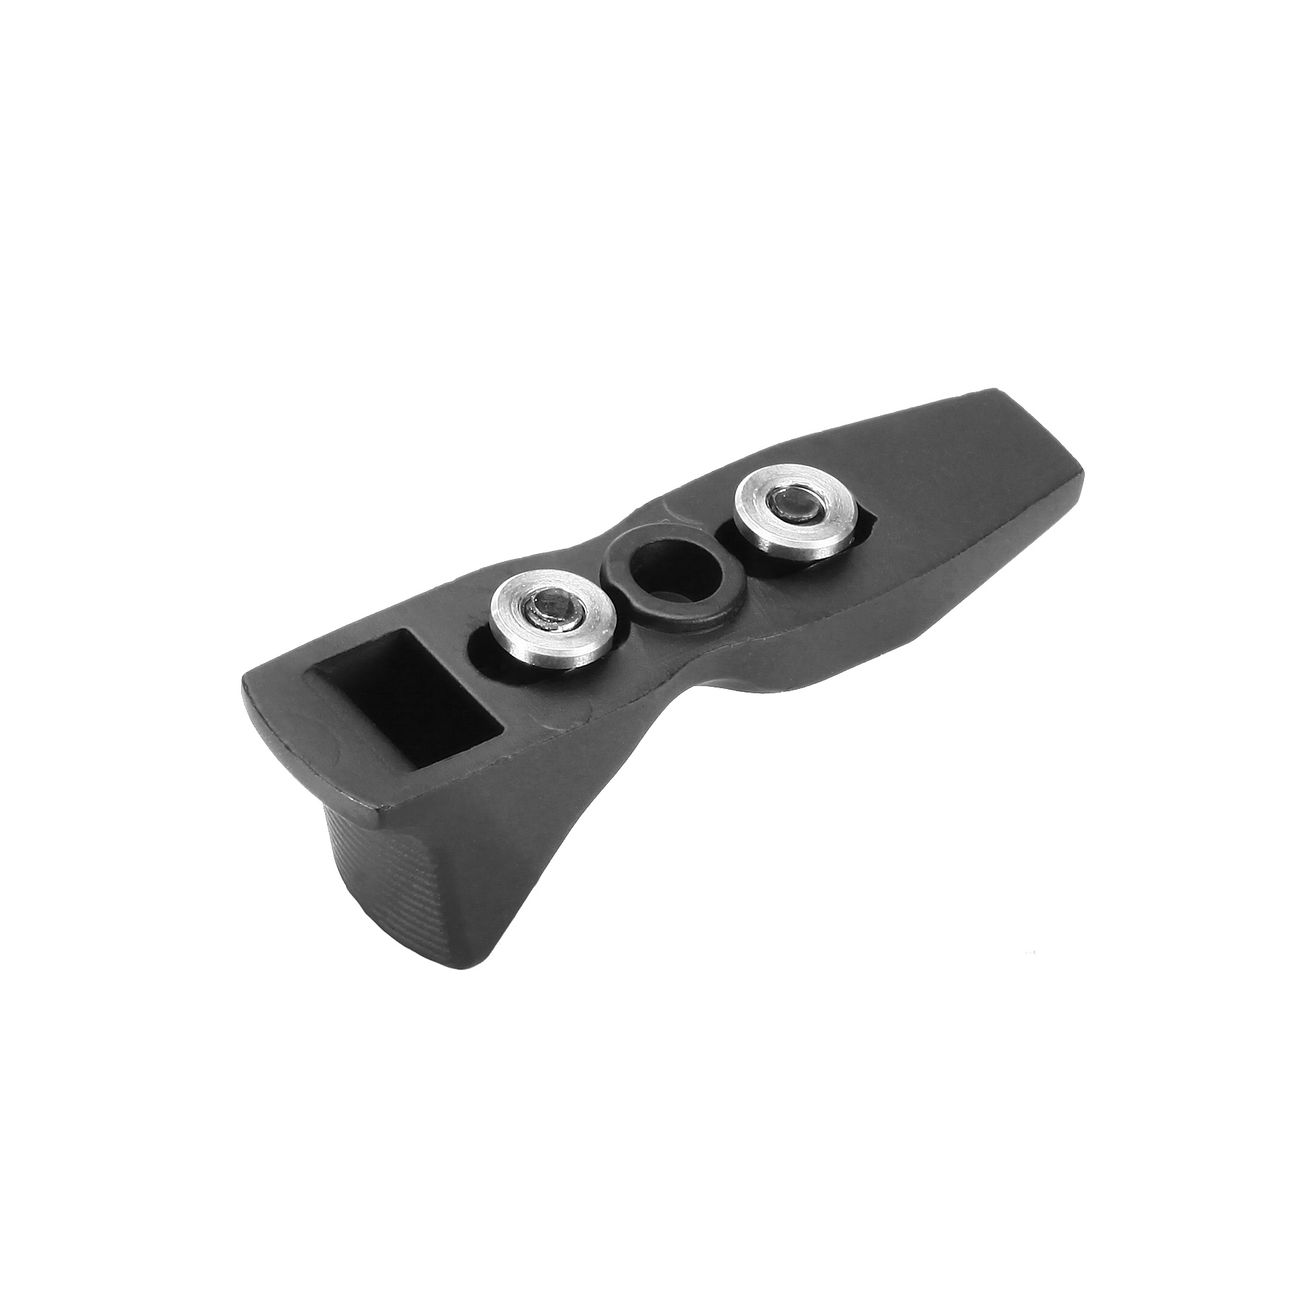 Ares KeyMod Aluminium Hand Stop Set Octarms Type-C (2 Stck) schwarz Bild 4